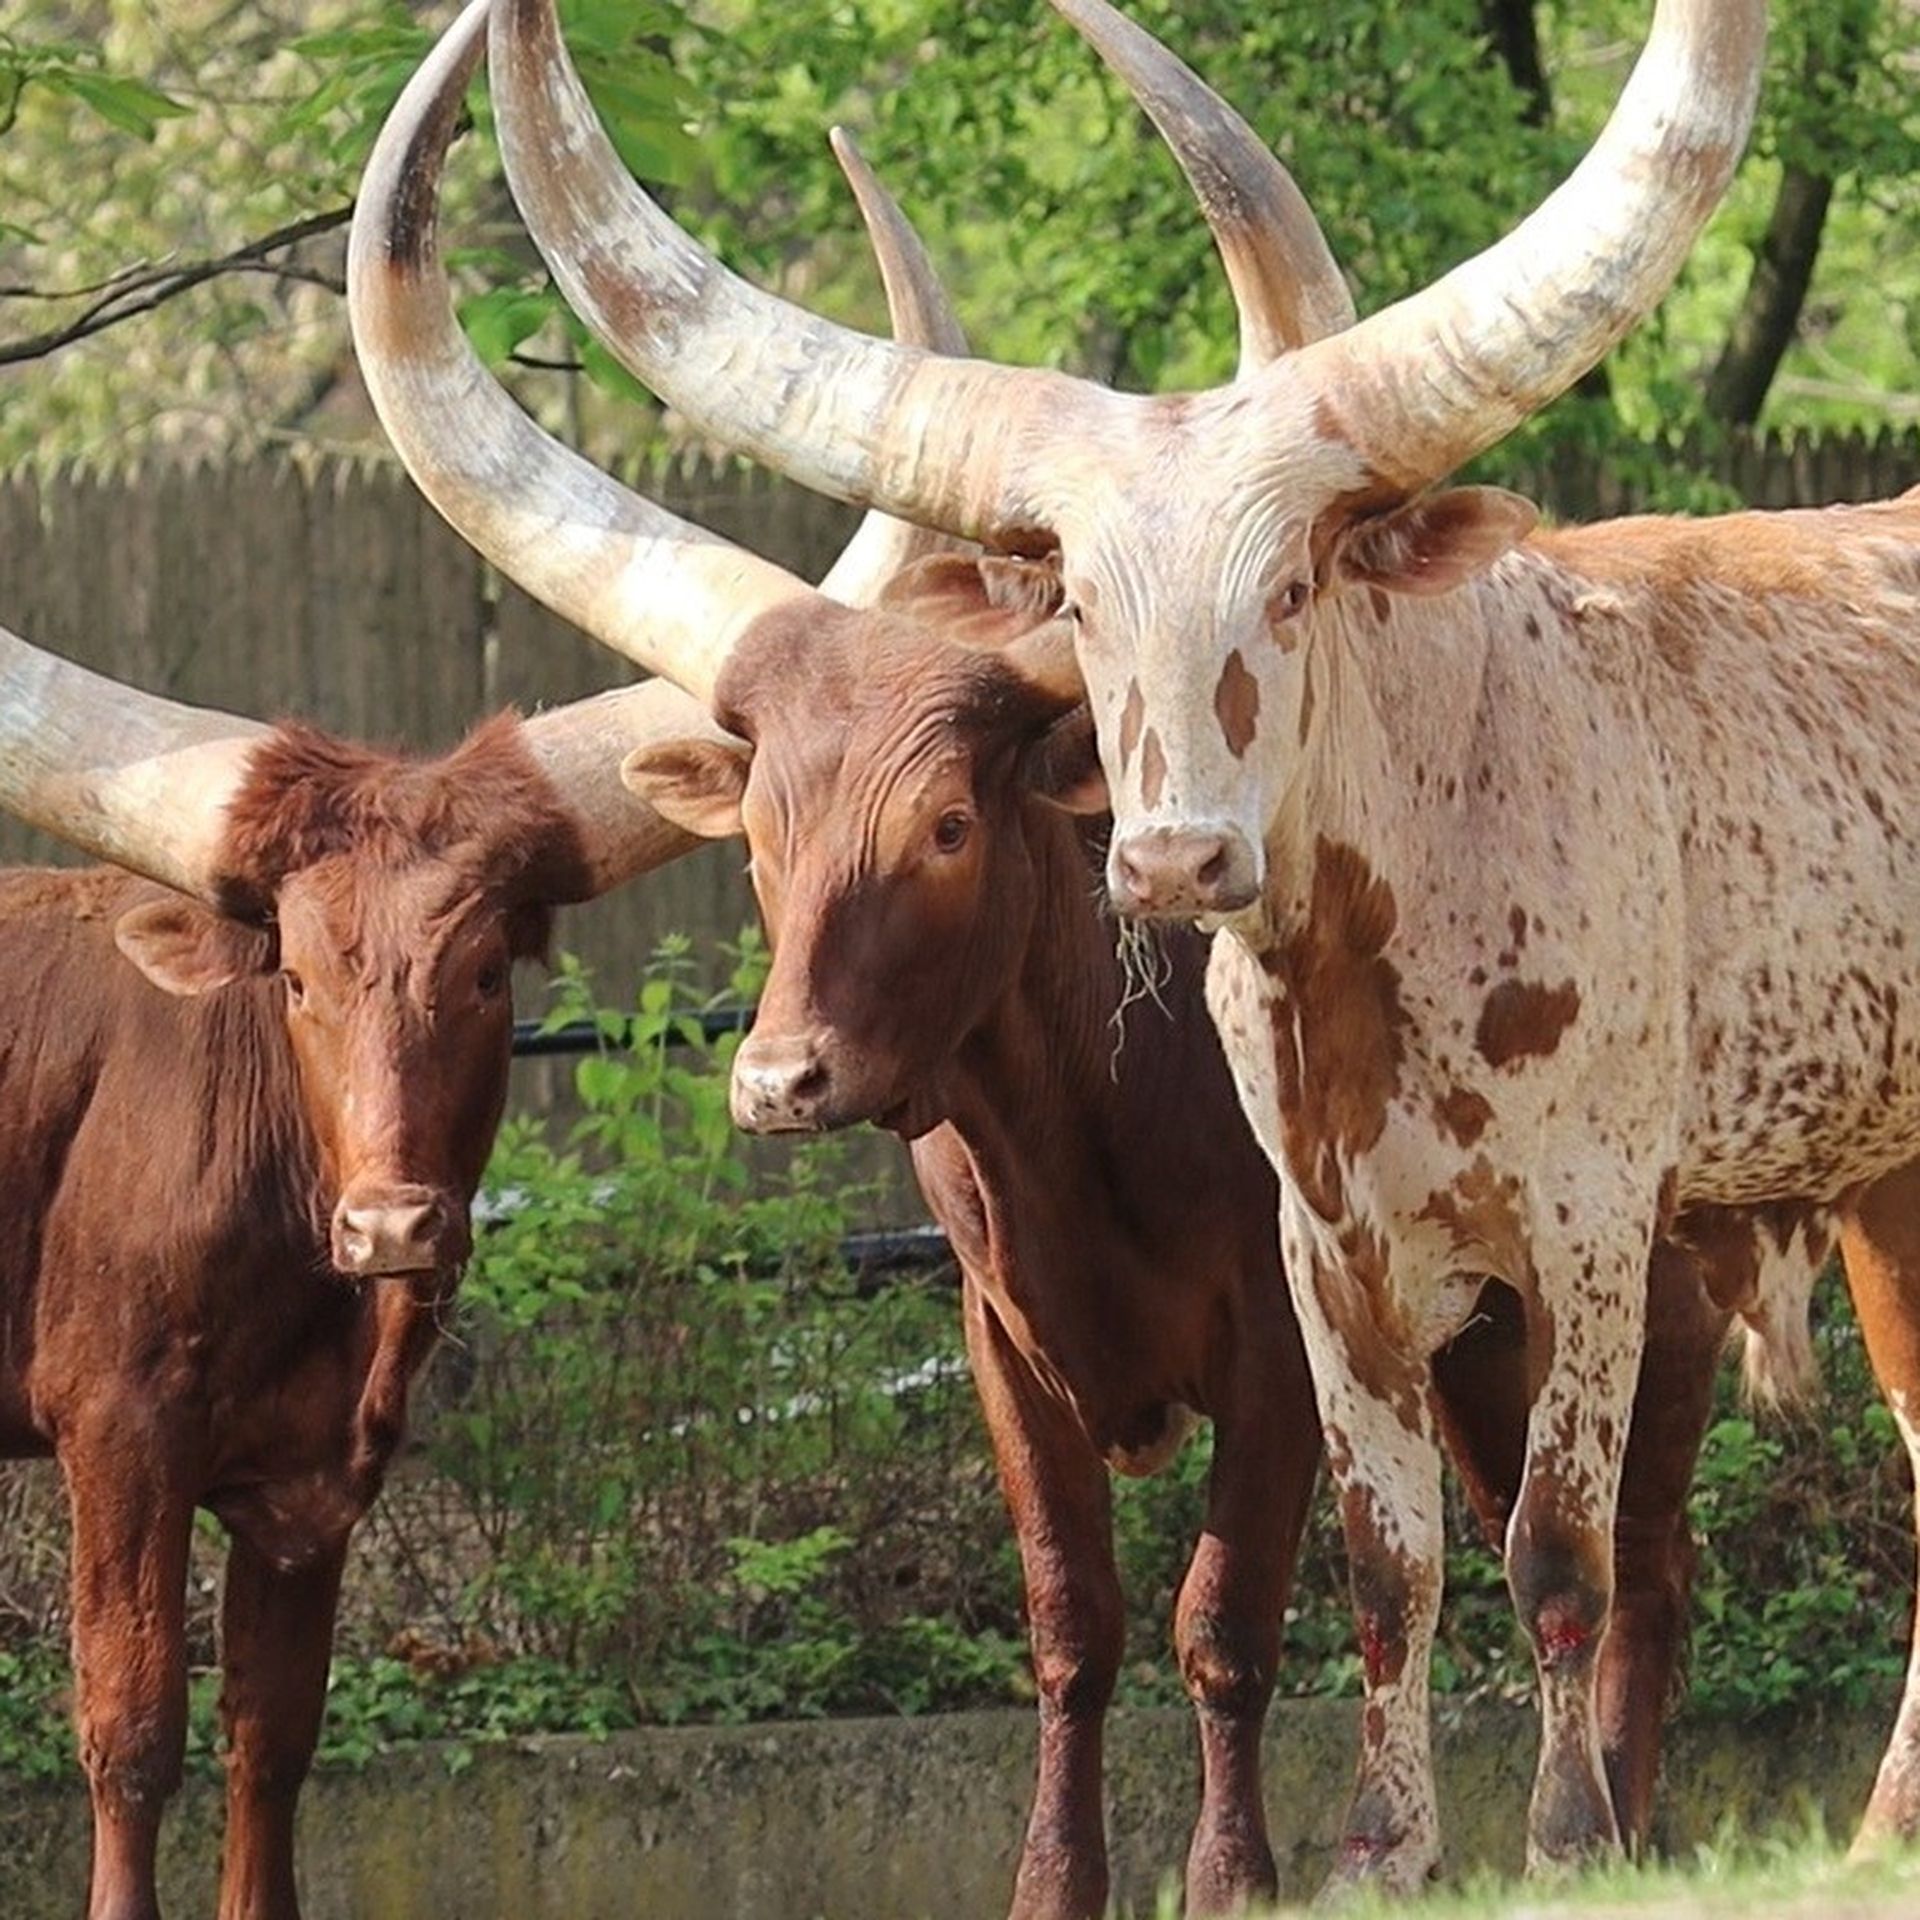 Ankole-Watusi cattle. Photo courtesy of the Philadelphia Zoo